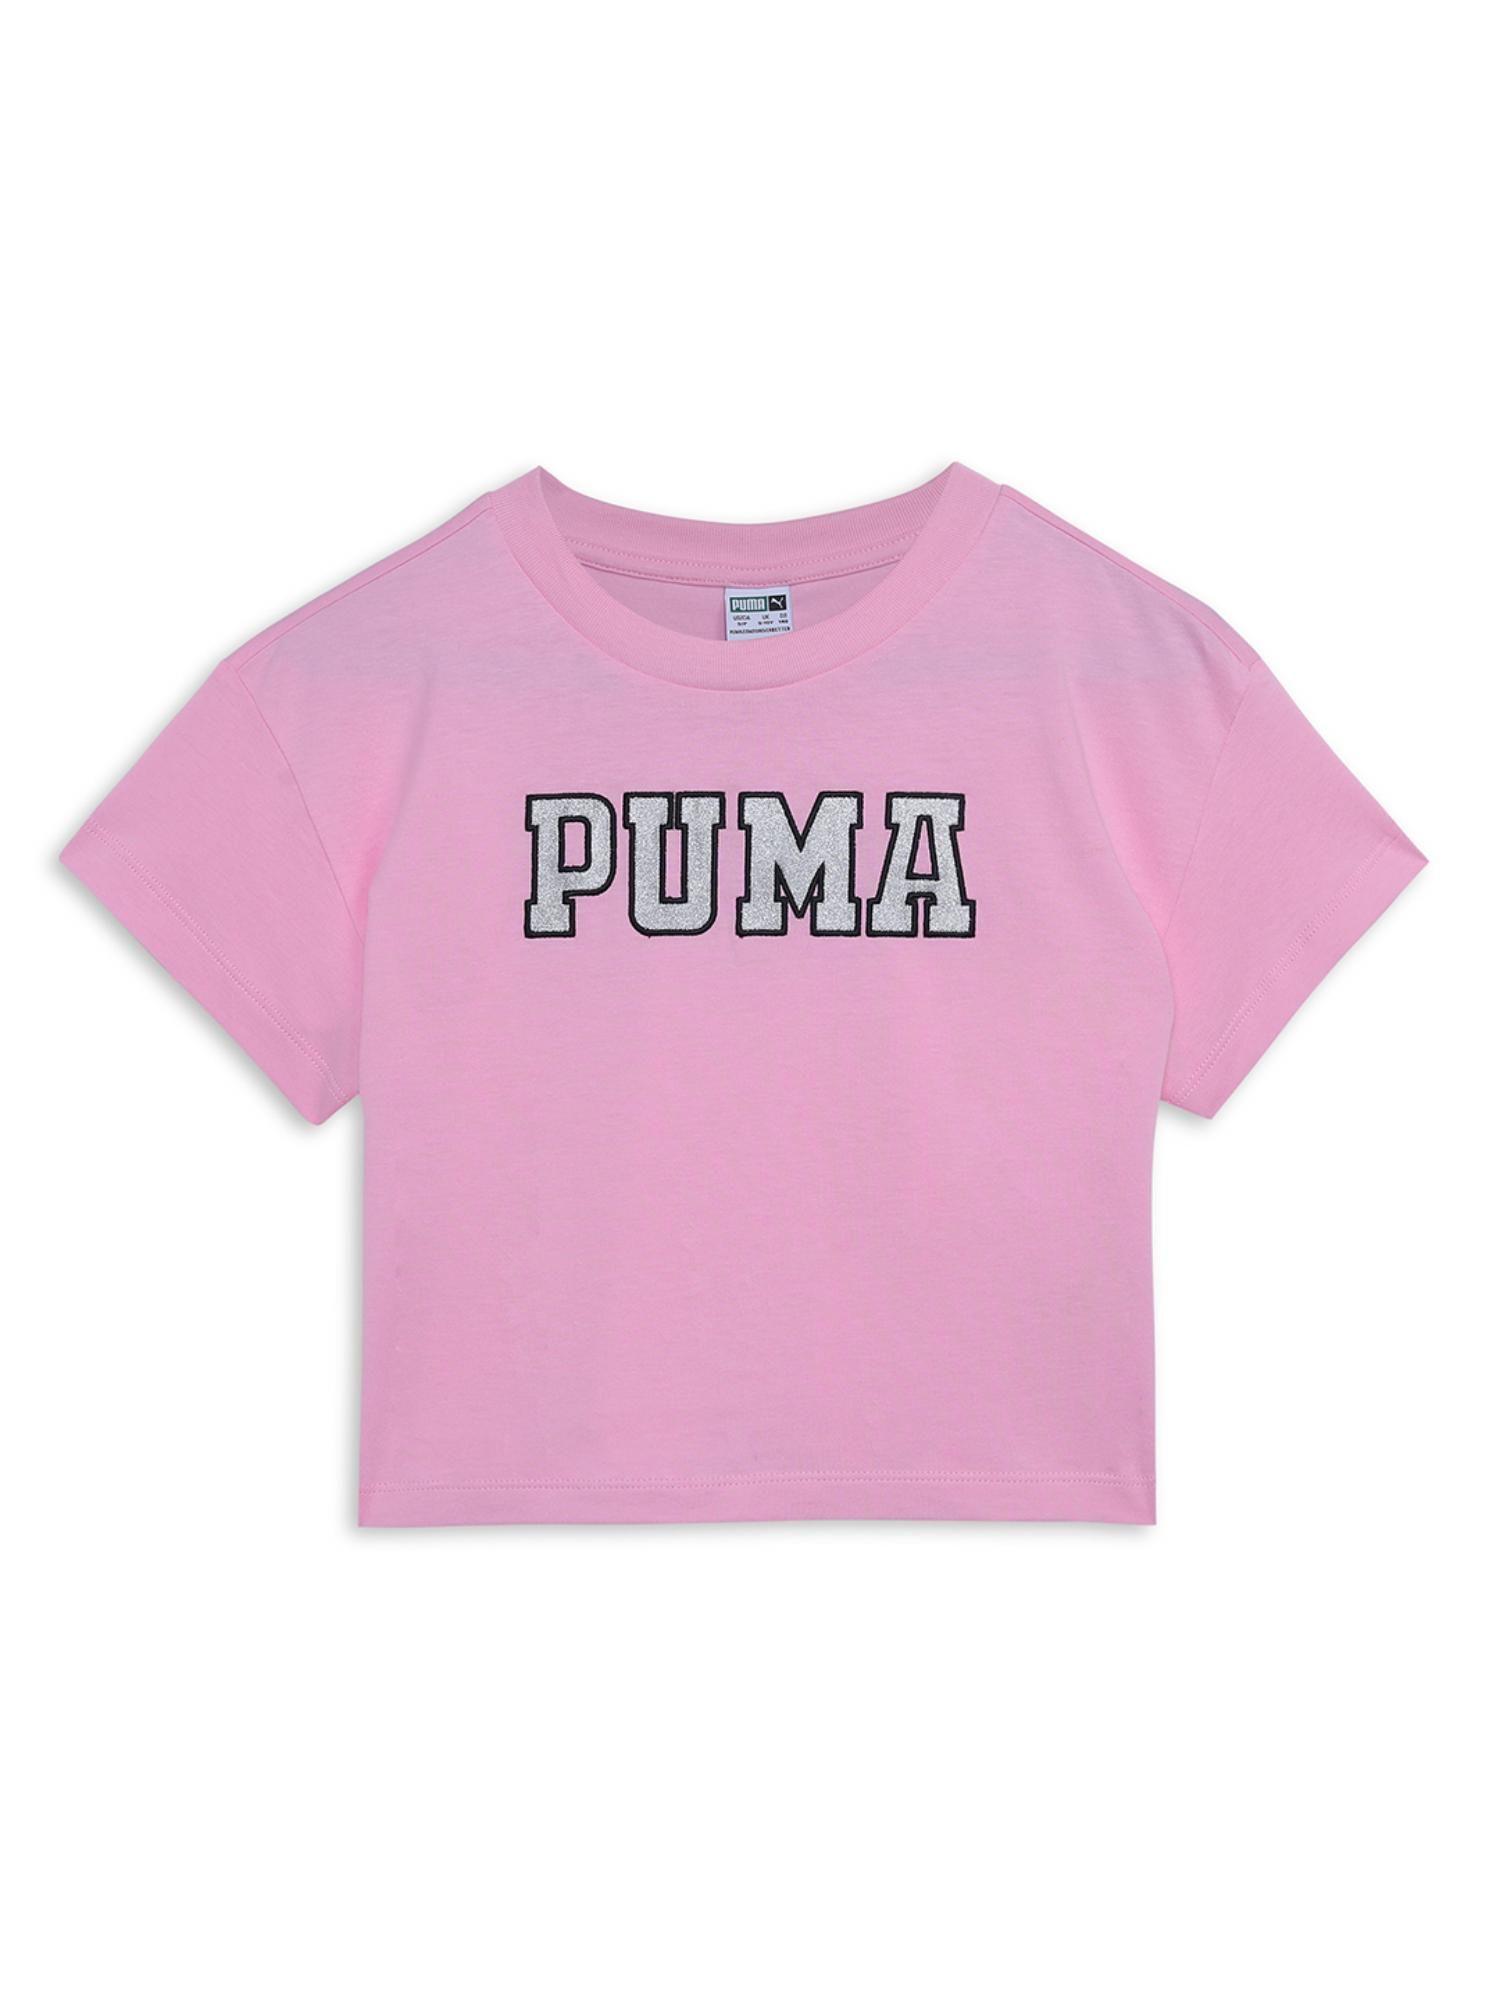 graphics-dancing-queen-girls-pink-t-shirt